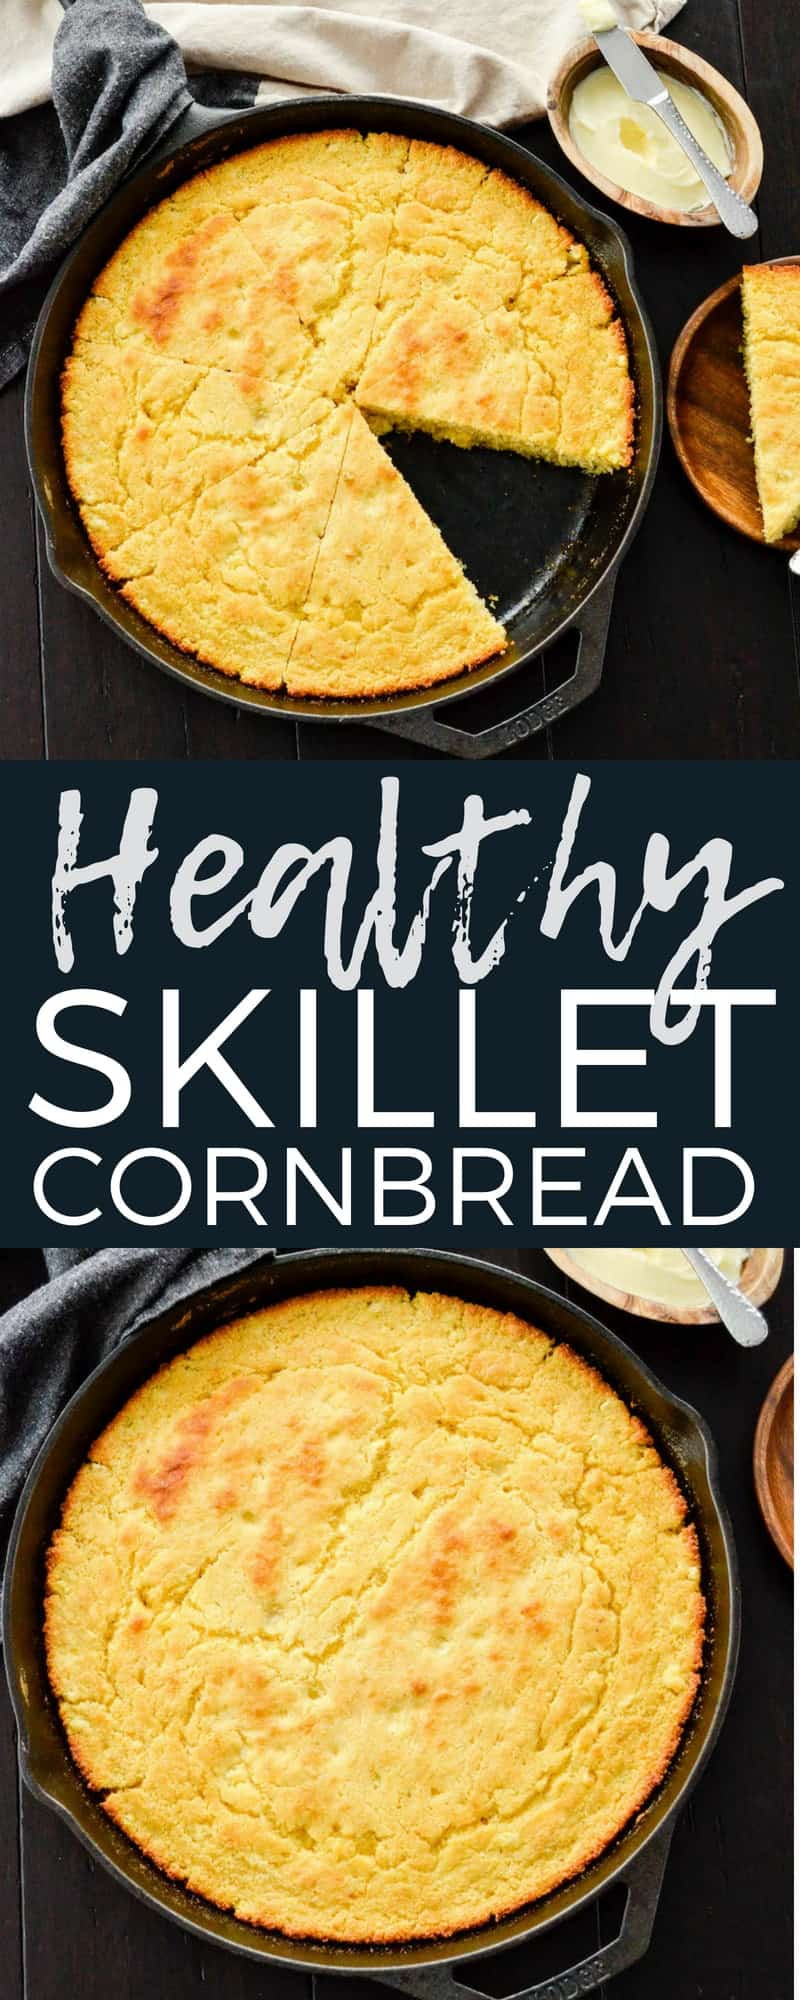 Healthy Cornbread Recipe
 Healthy Skillet Cornbread gluten free option